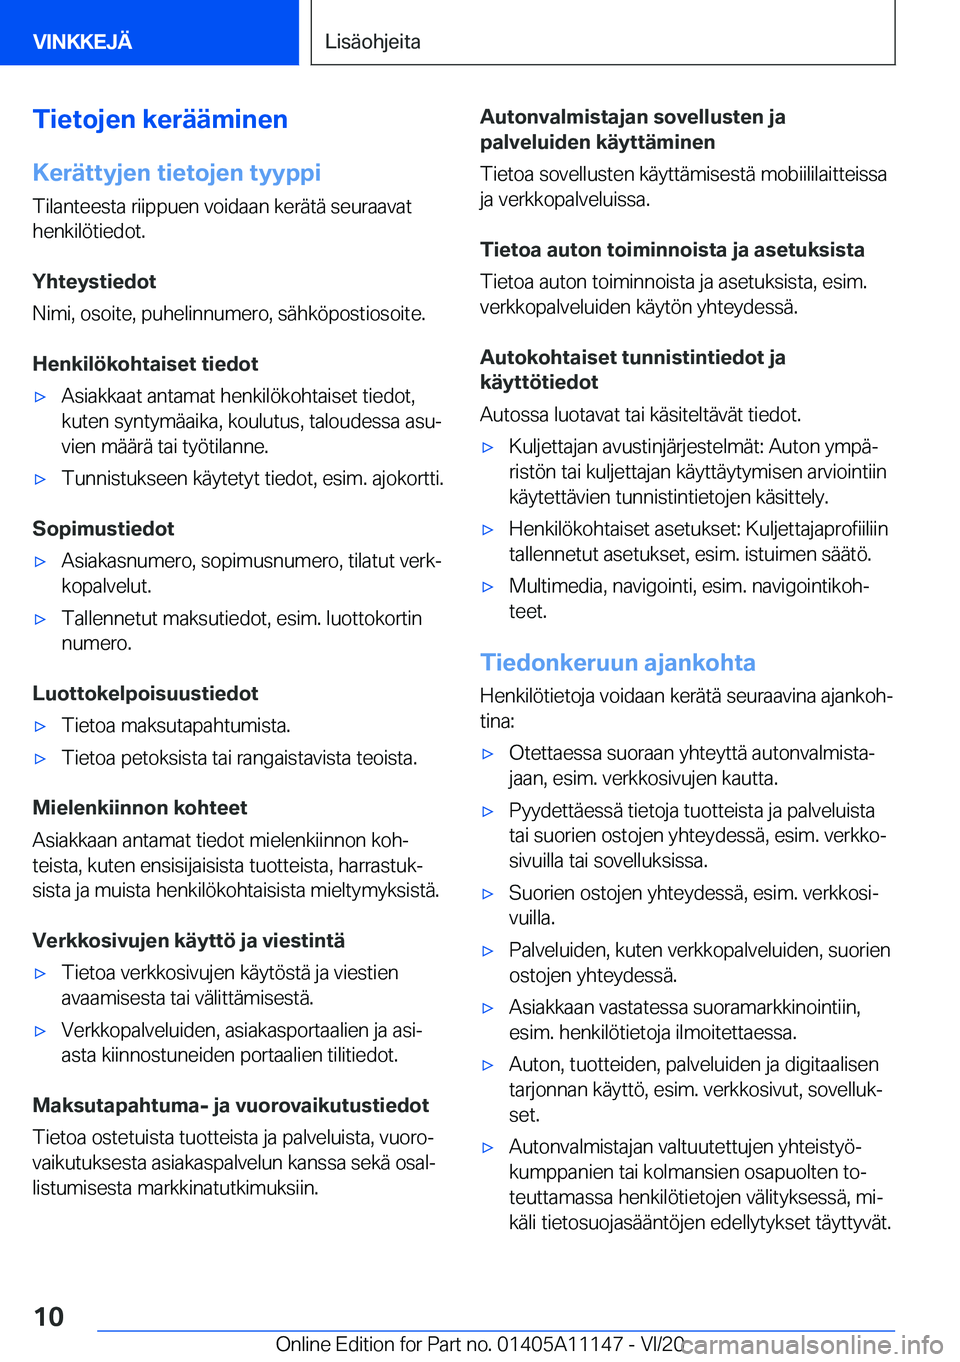 BMW 8 SERIES COUPE 2021  Omistajan Käsikirja (in Finnish) �T�i�e�t�o�j�e�n��k�e�r�